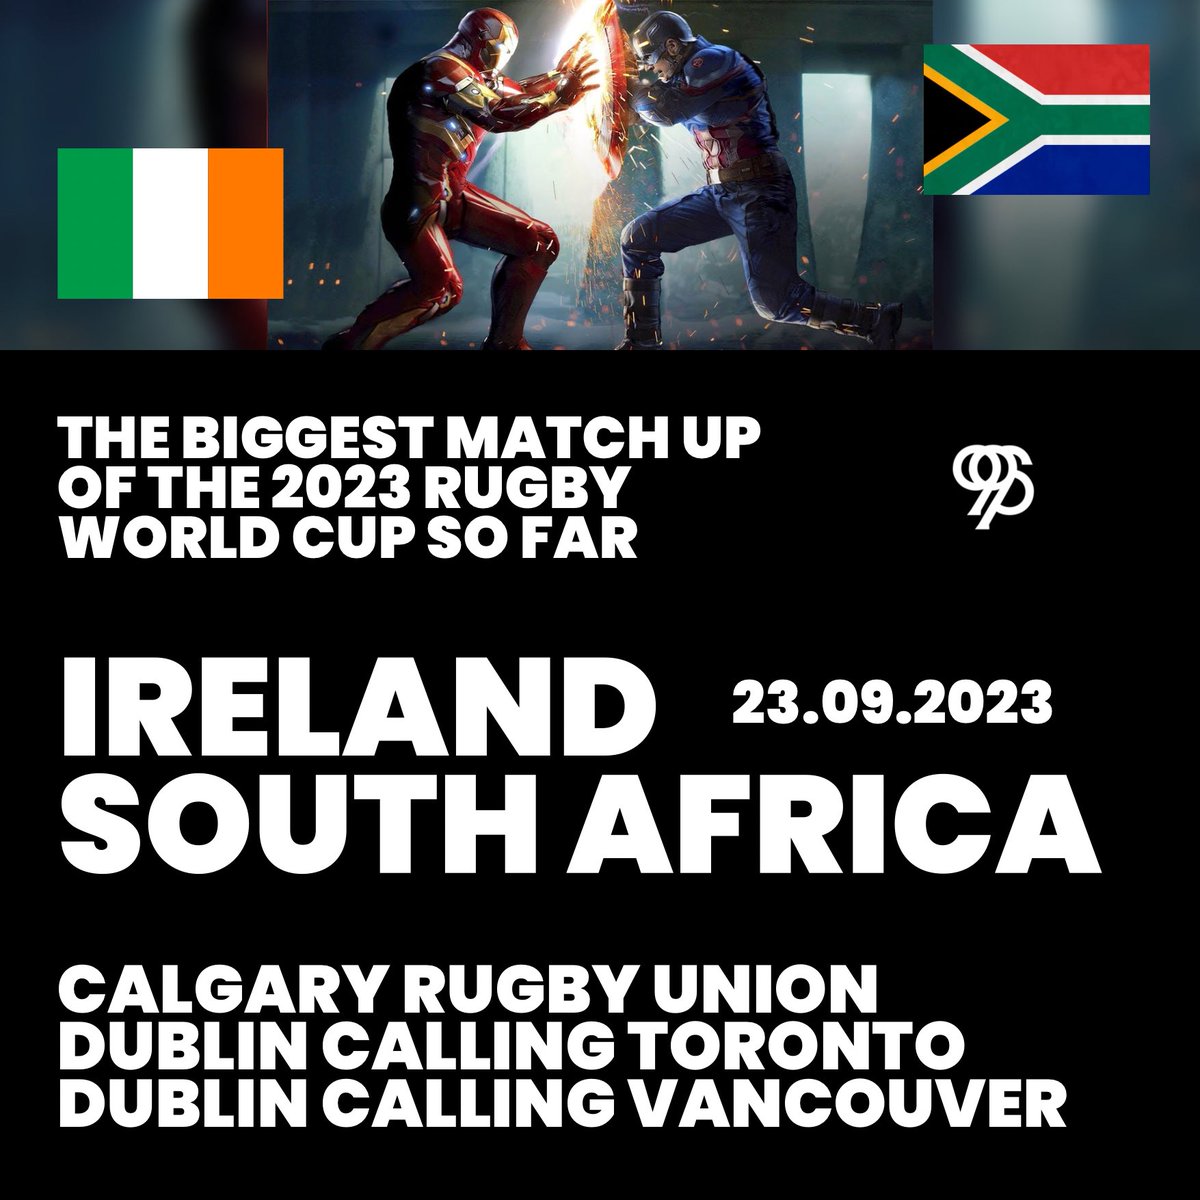 LIVE Ireland x South Africa Calgary | @CalgaryRugby 13:00 Toronto | @dublincallingto 15:00 Powered by #MacronPacific #KeepRugbySocial | #RWC2023